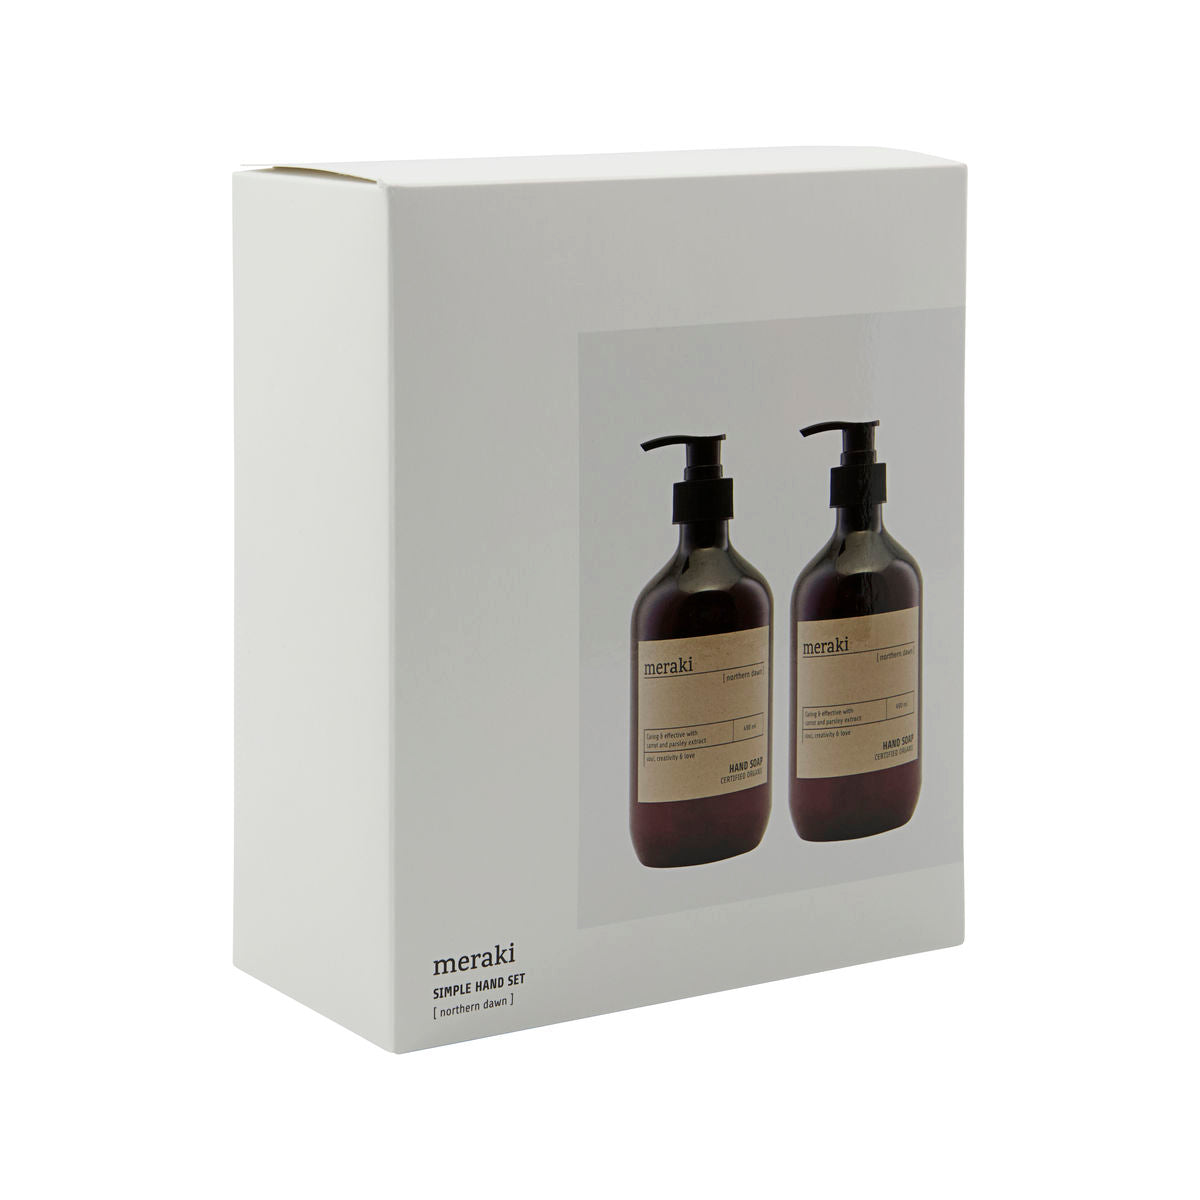 Meraki Gift Box, Simple Hand Set Northern Dawn Hand Soap